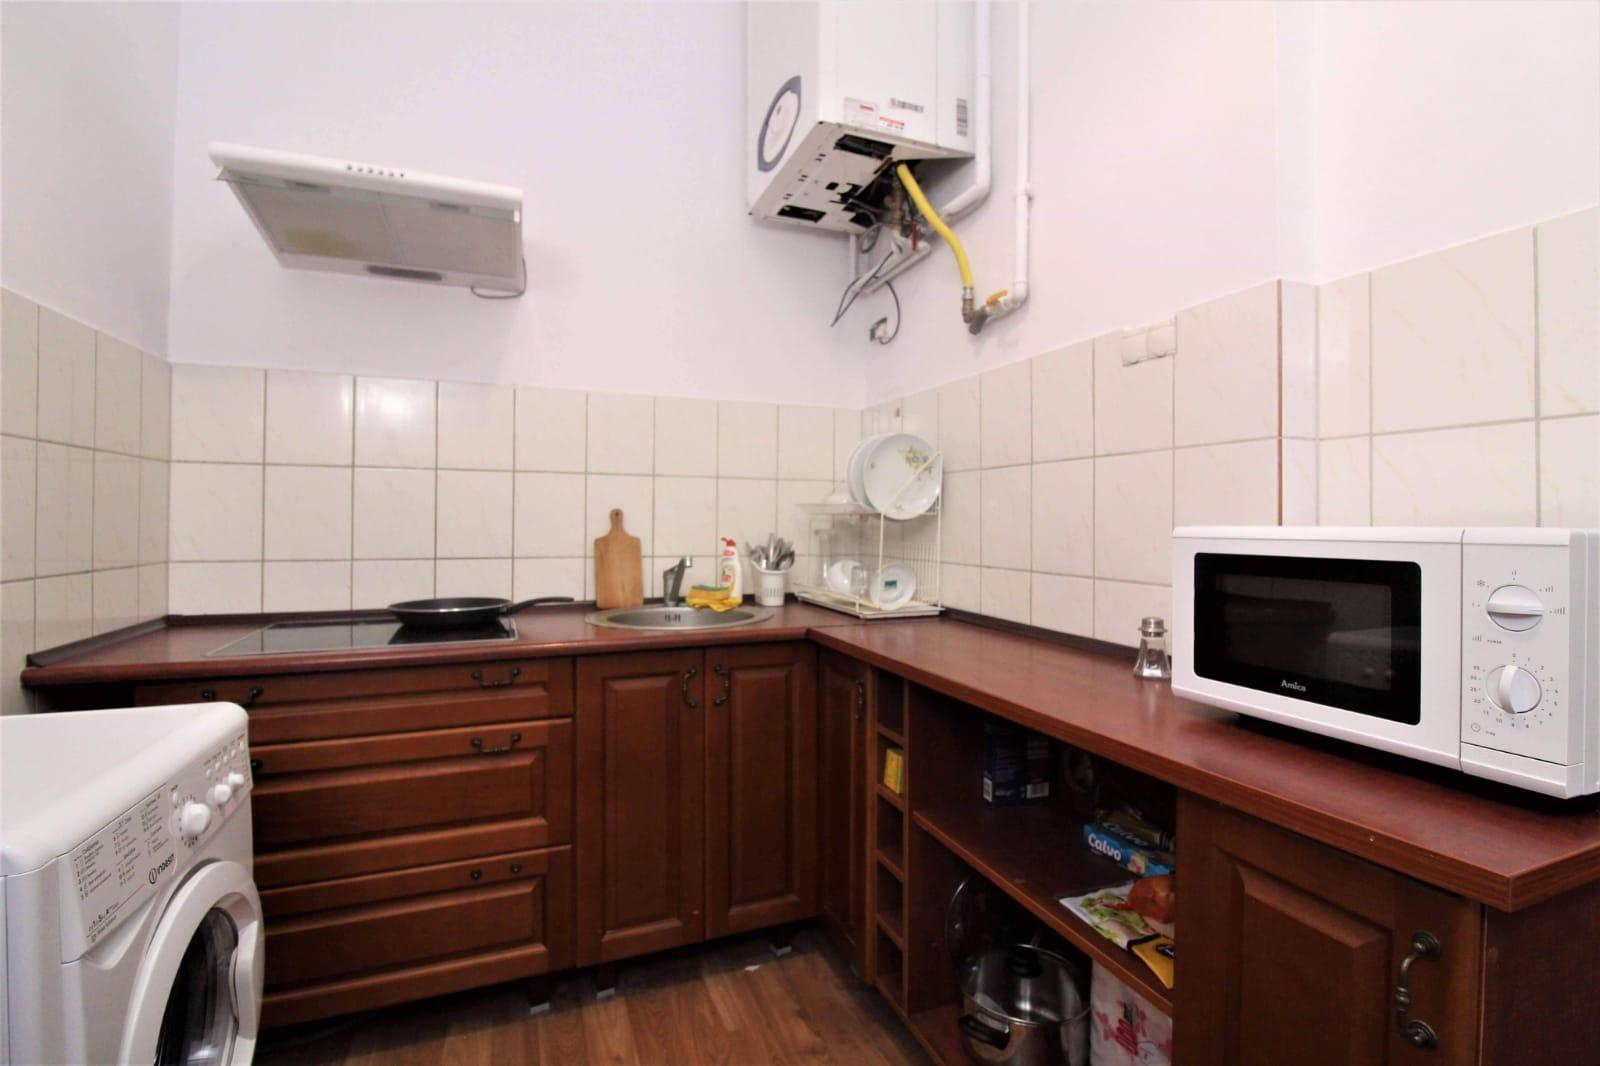 Agnieszki - 5 bedroom apartment in Krakow